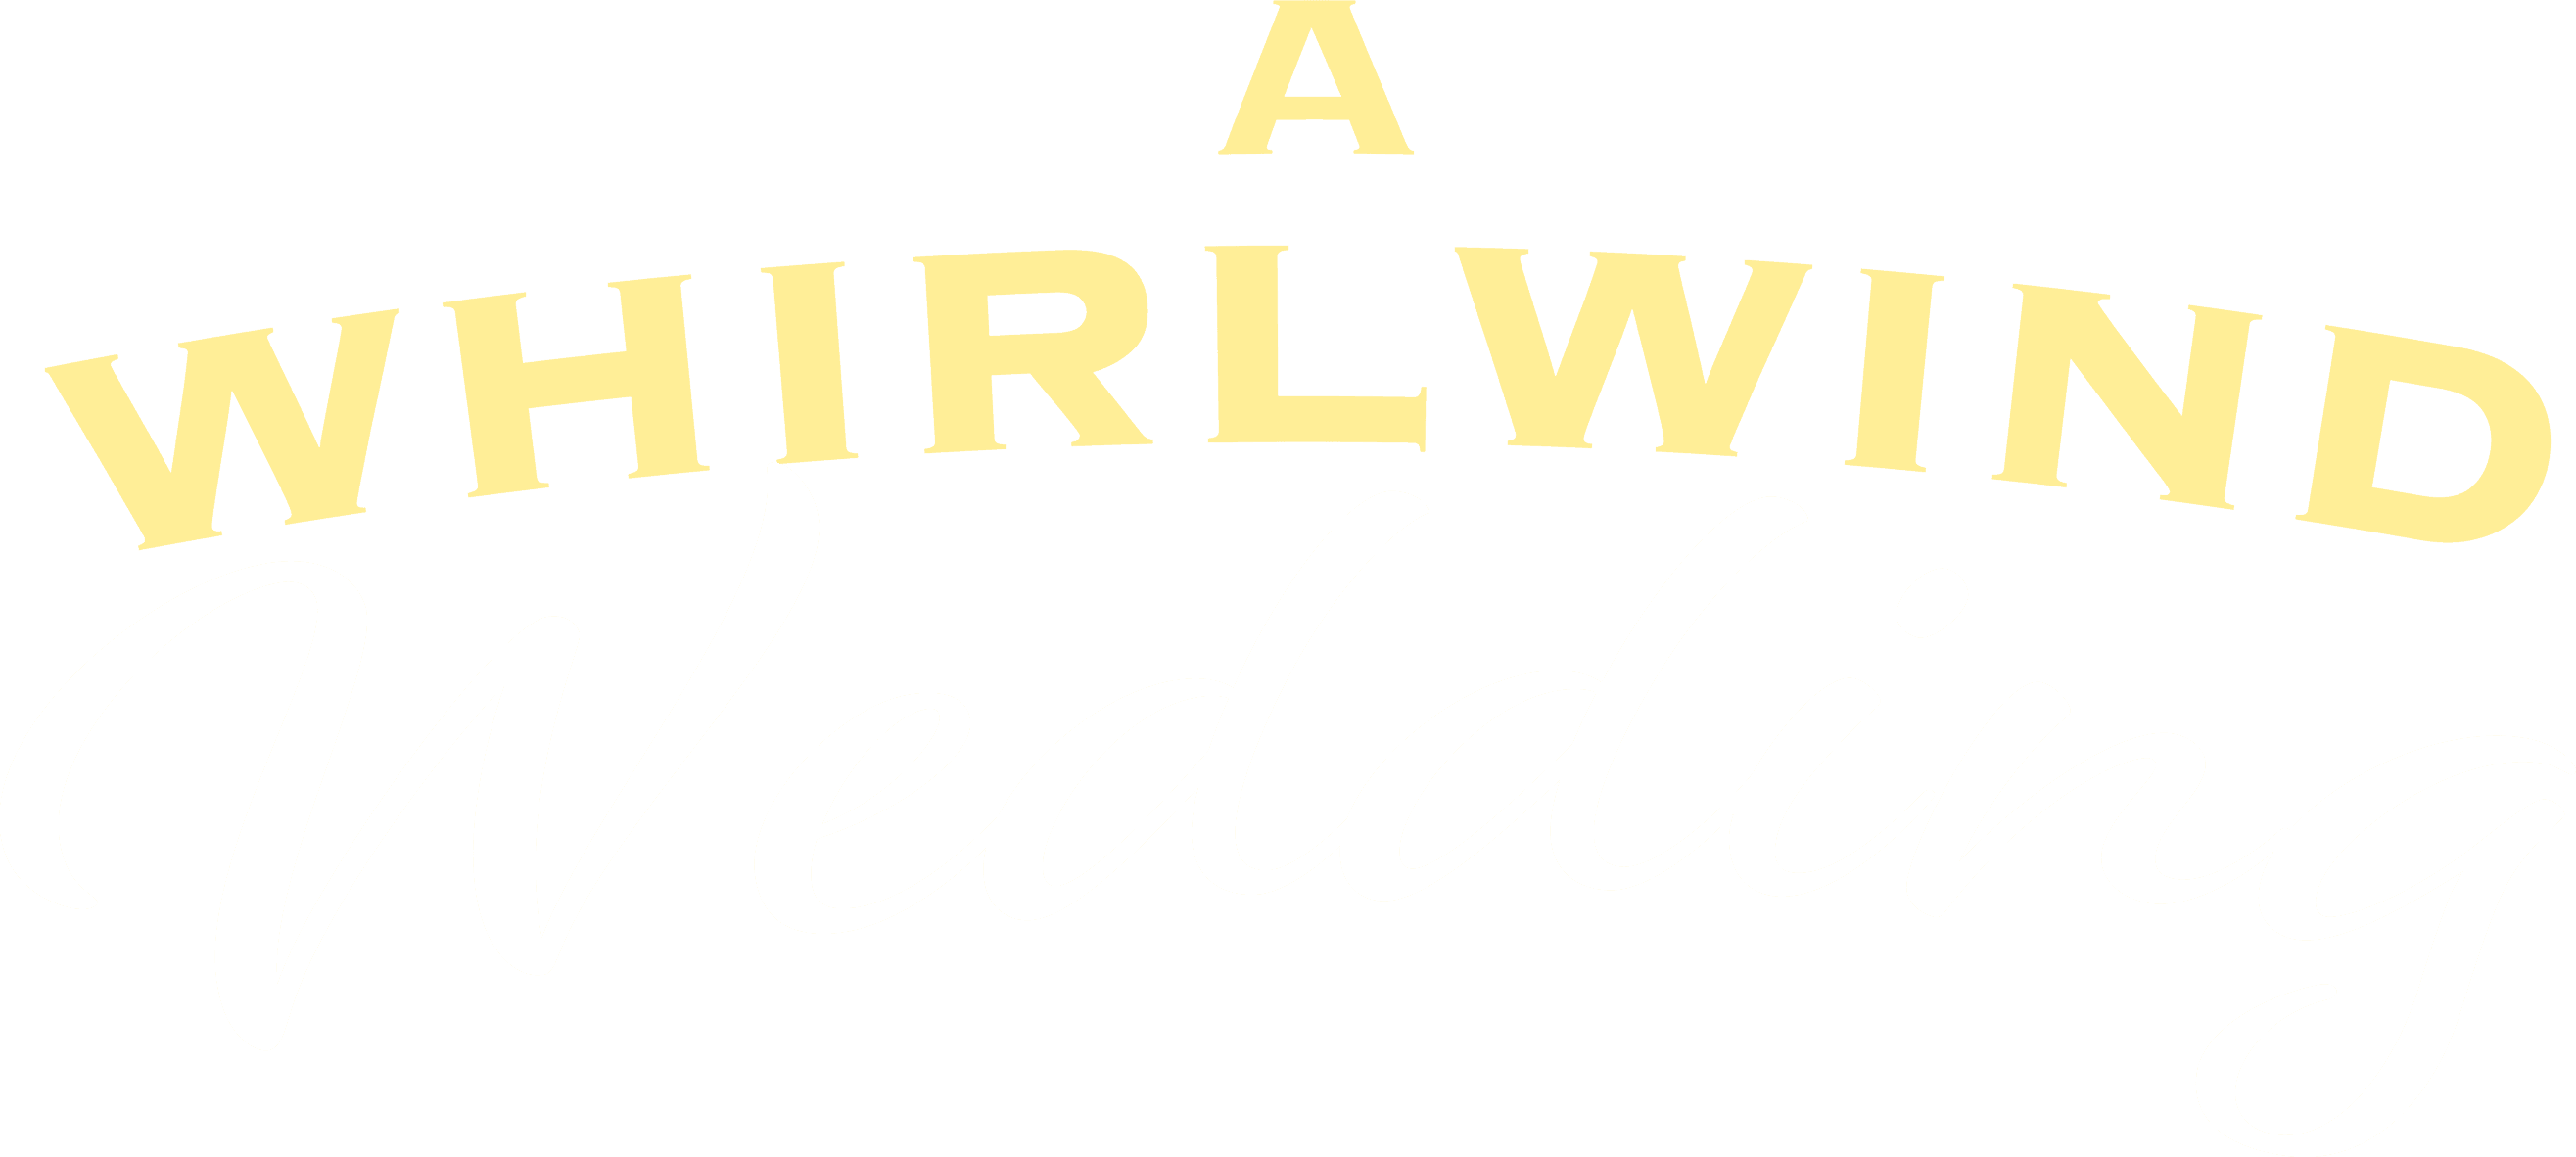 A Whirlwind Wedding logo